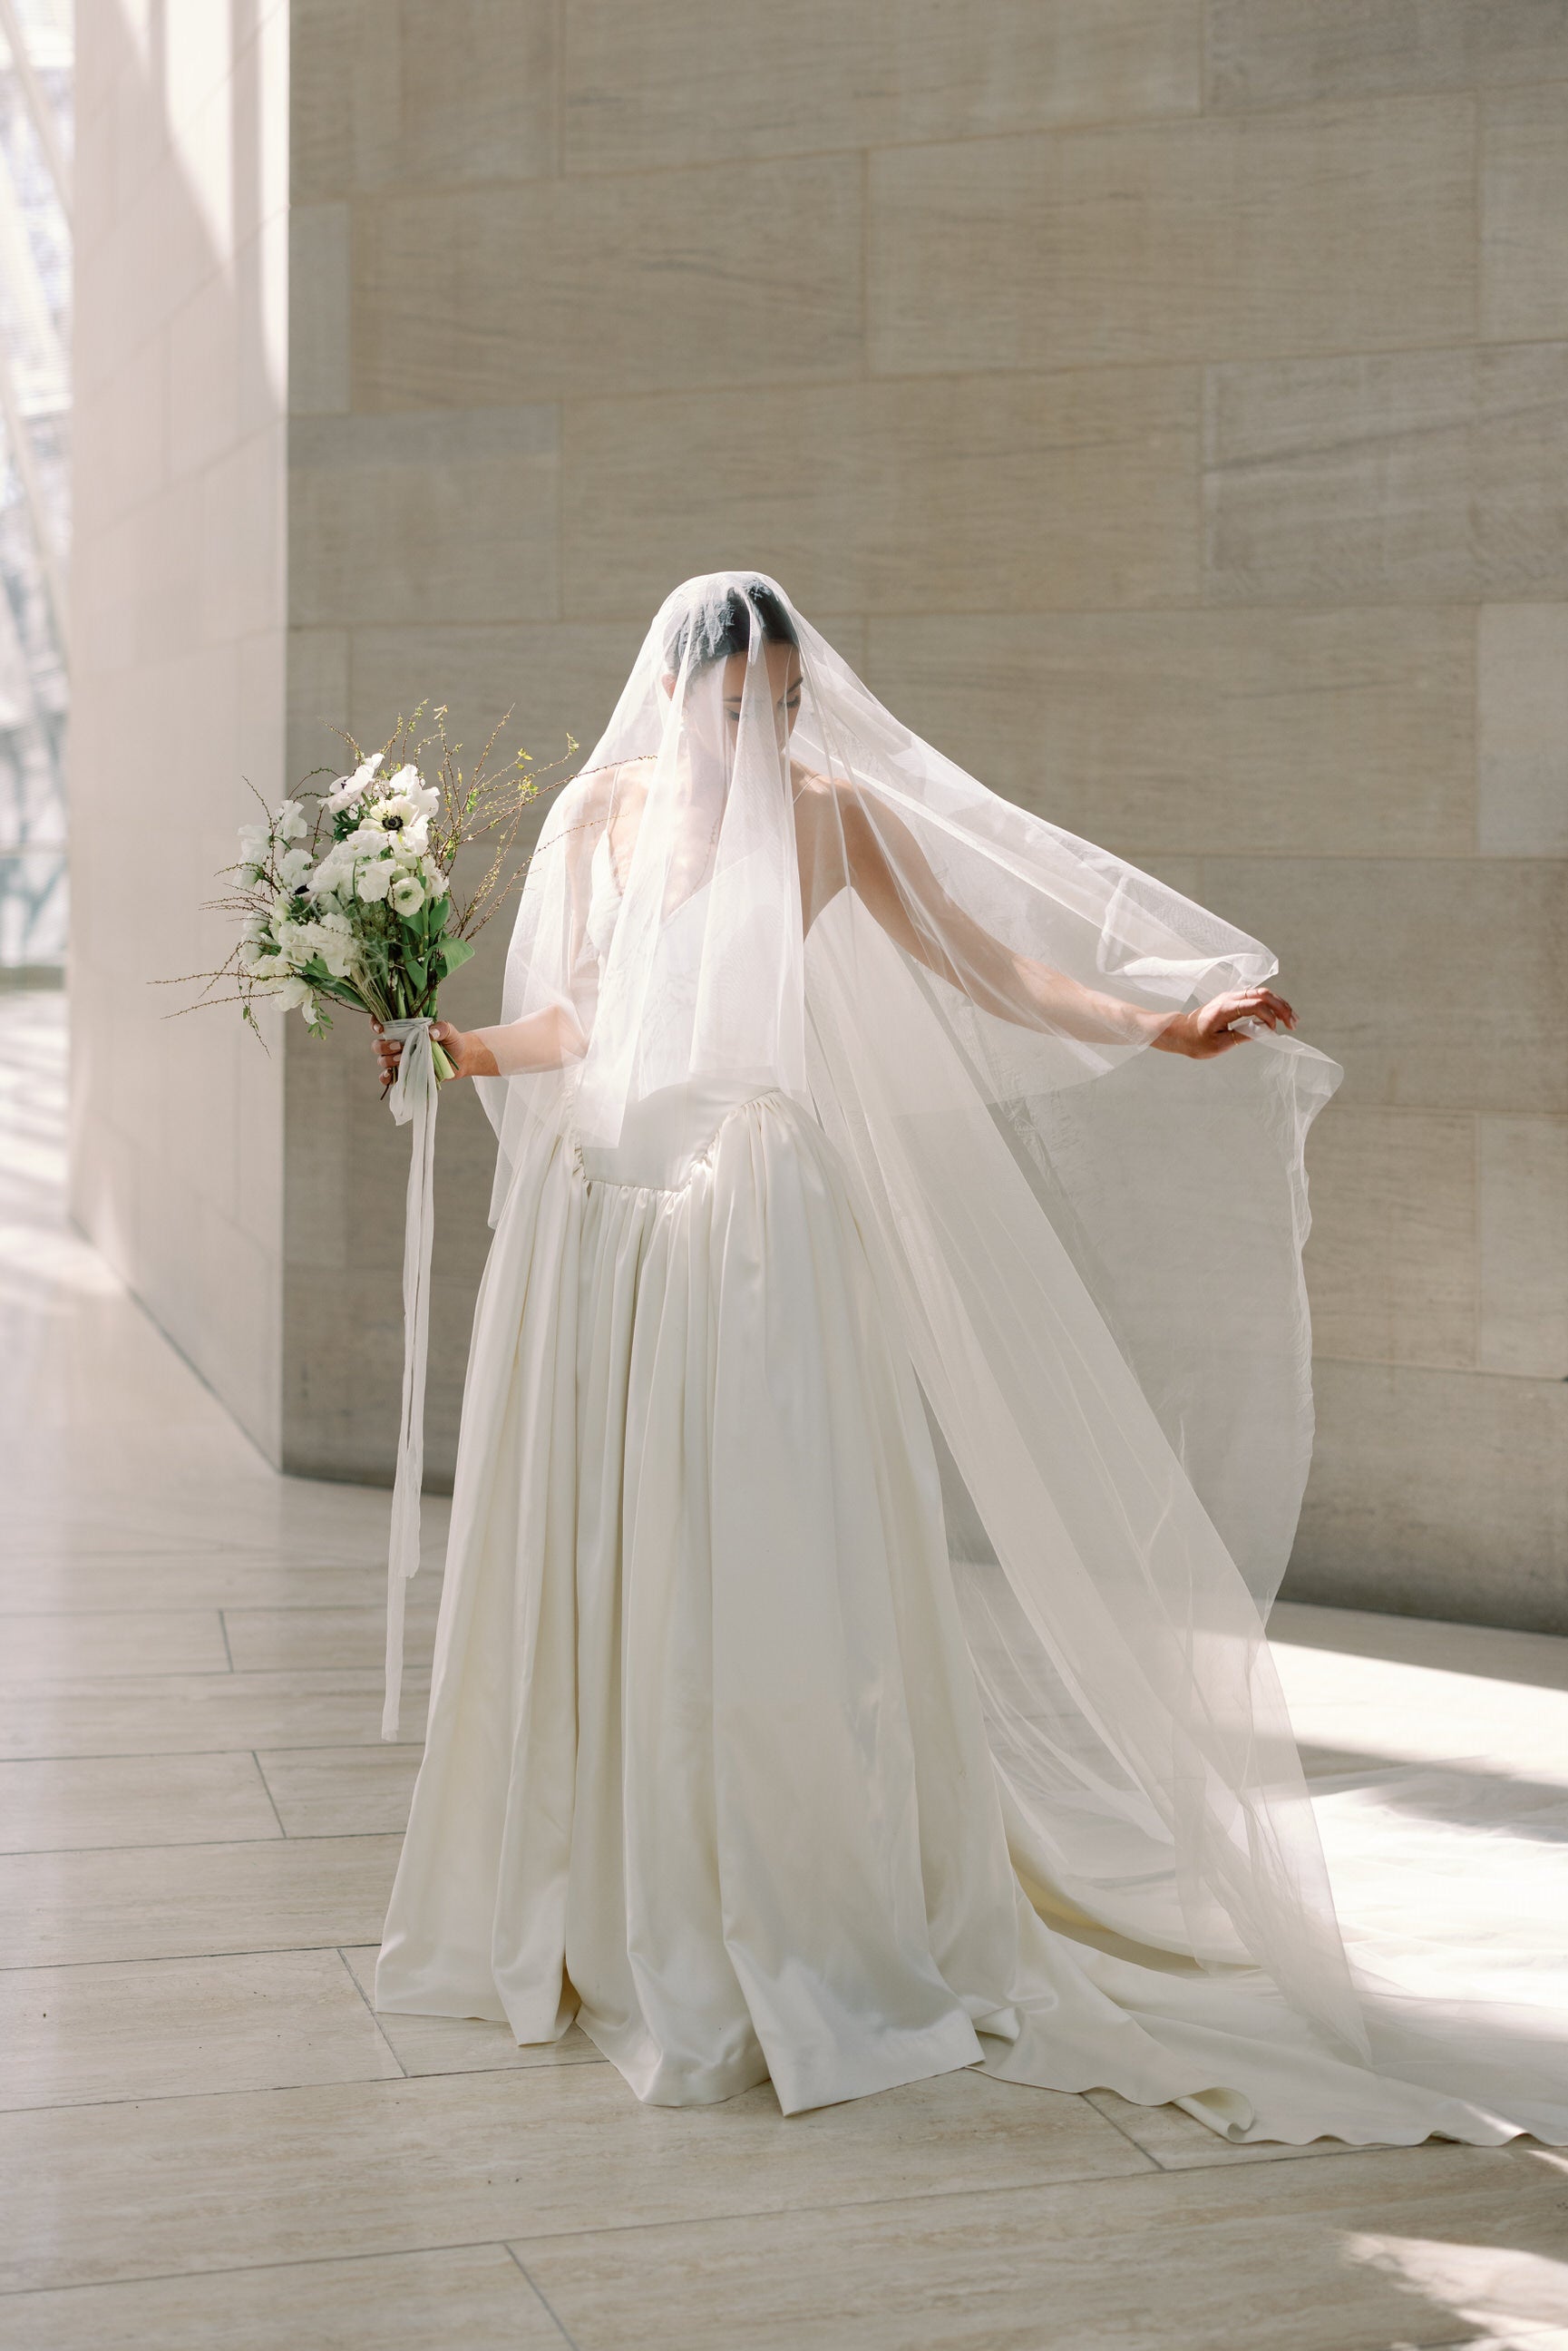 Brydealo Factory Two-Tiered Fingertip Length Bridal Veil Wholesale Lace Trim Wedding Veil